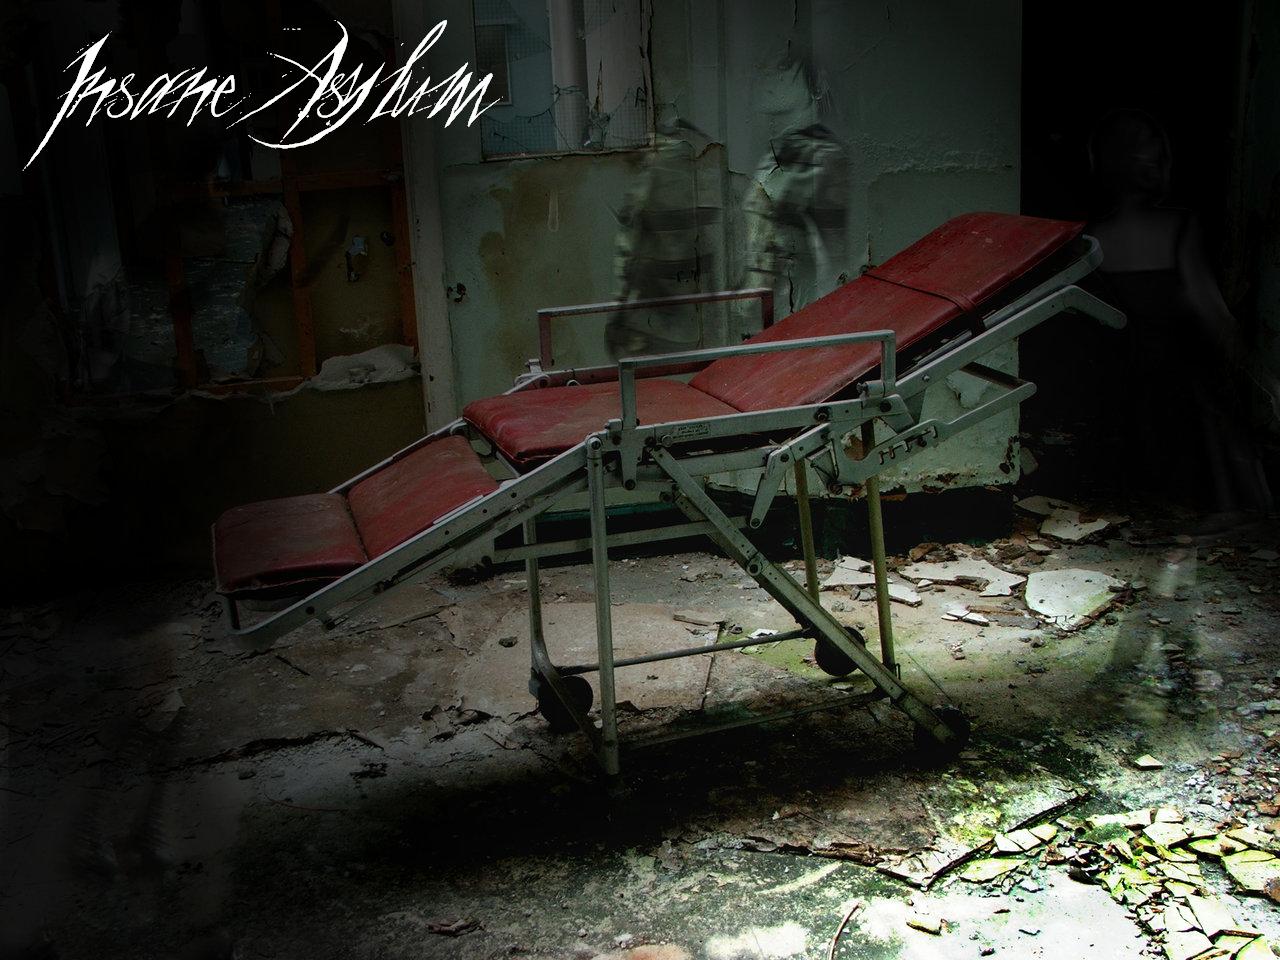 Insane Asylum